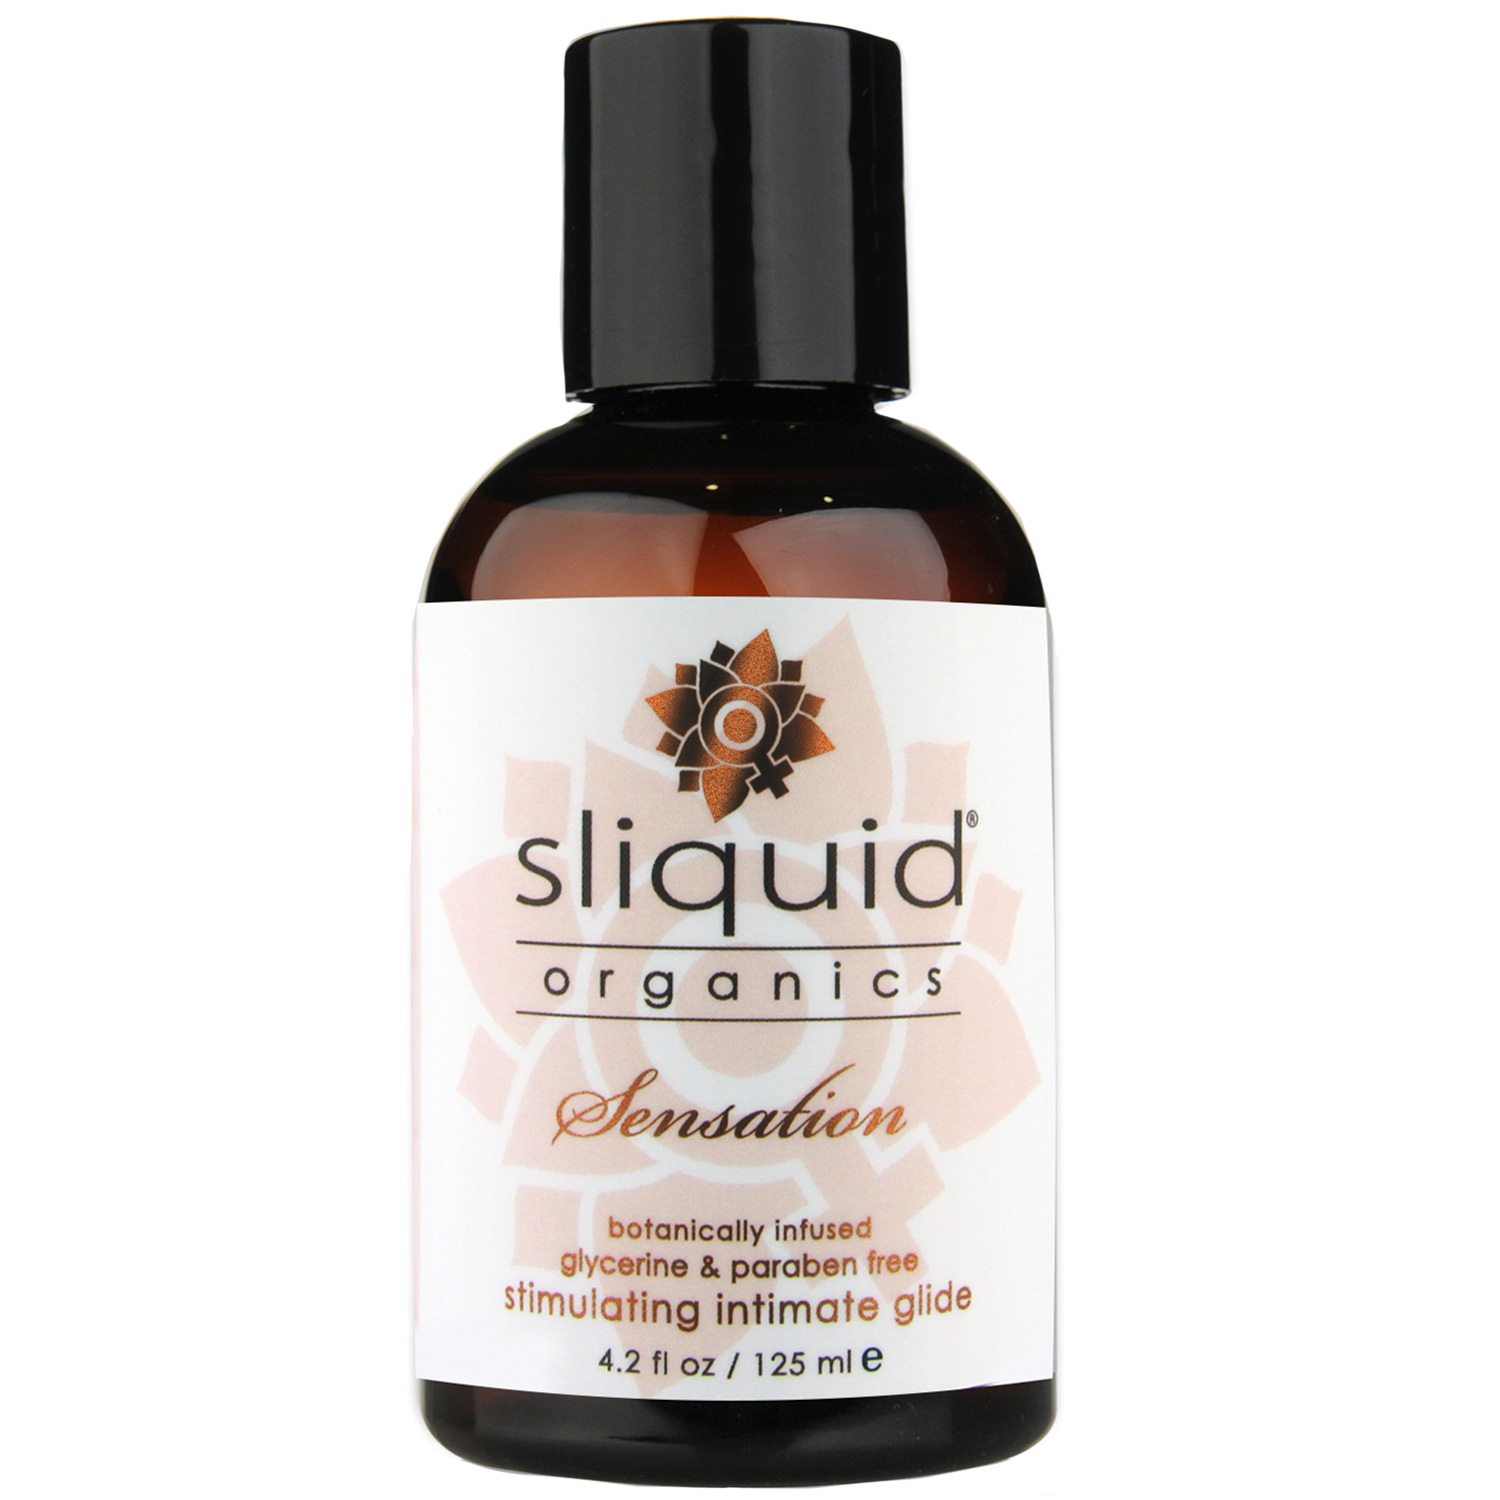 Sliquid Organic Sensations Glidecreme 125 ml - Clear